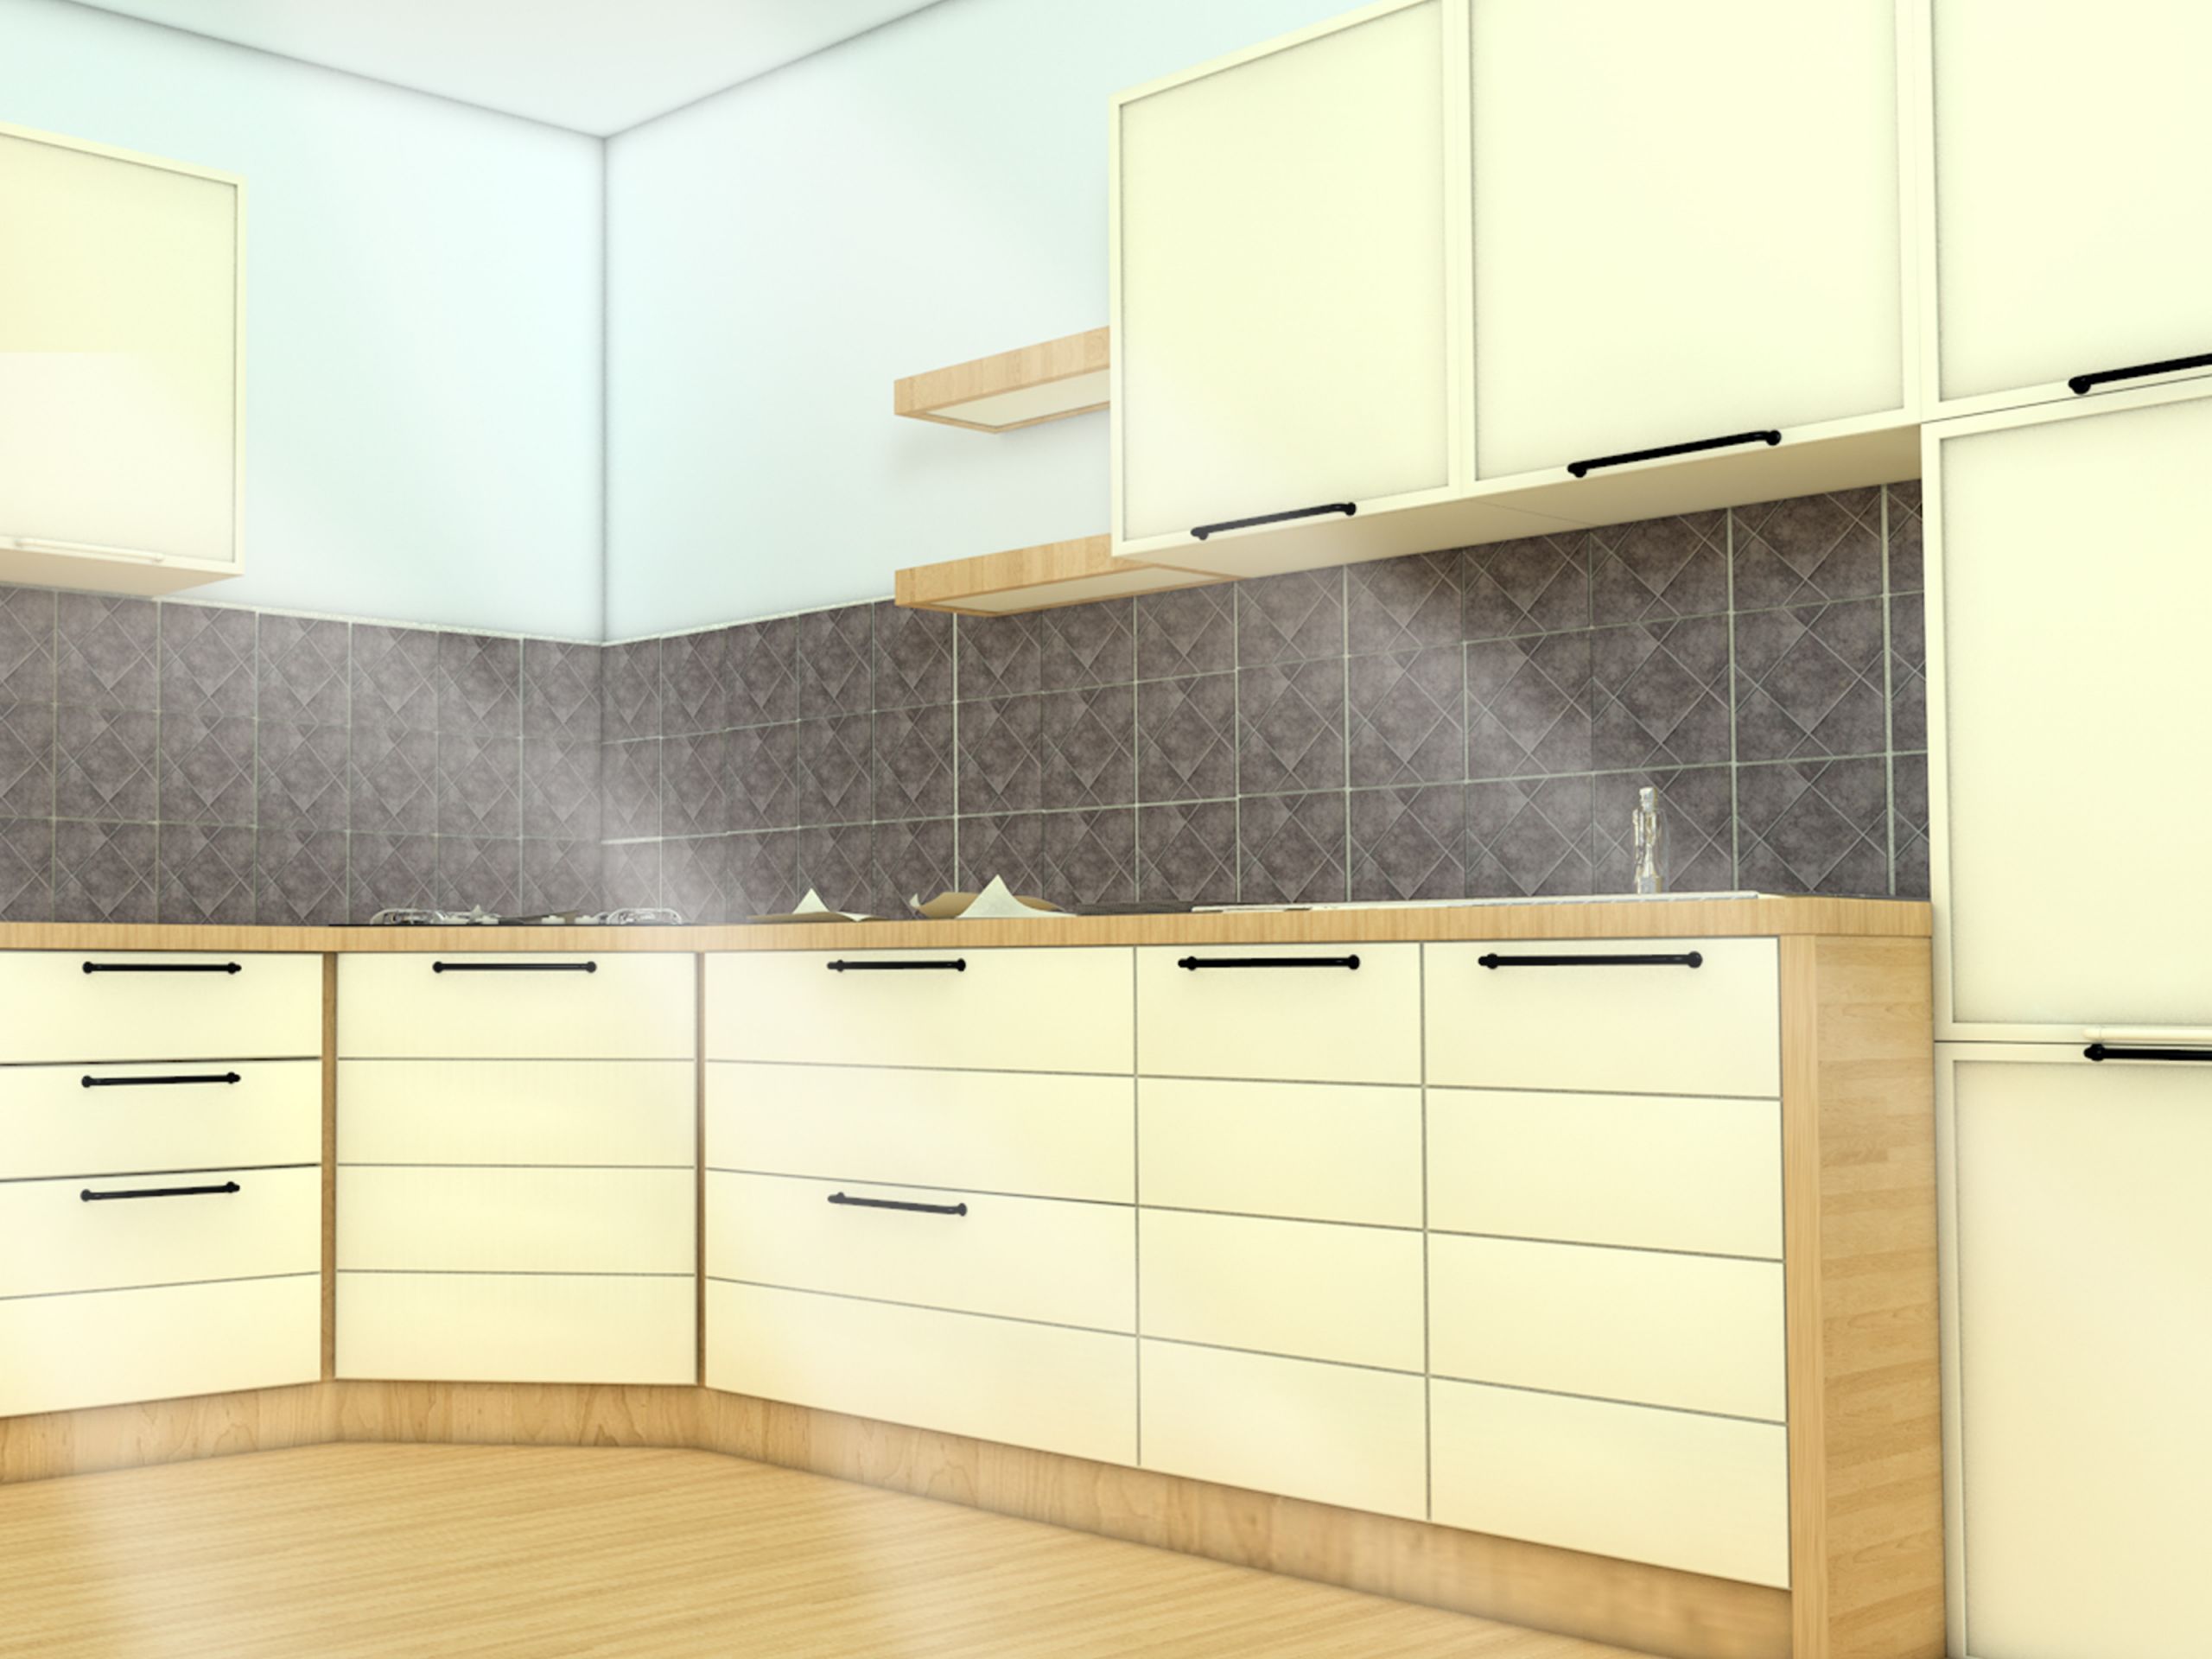 Install Backsplash Tile In Kitchen
 How to Install a Kitchen Backsplash with wikiHow